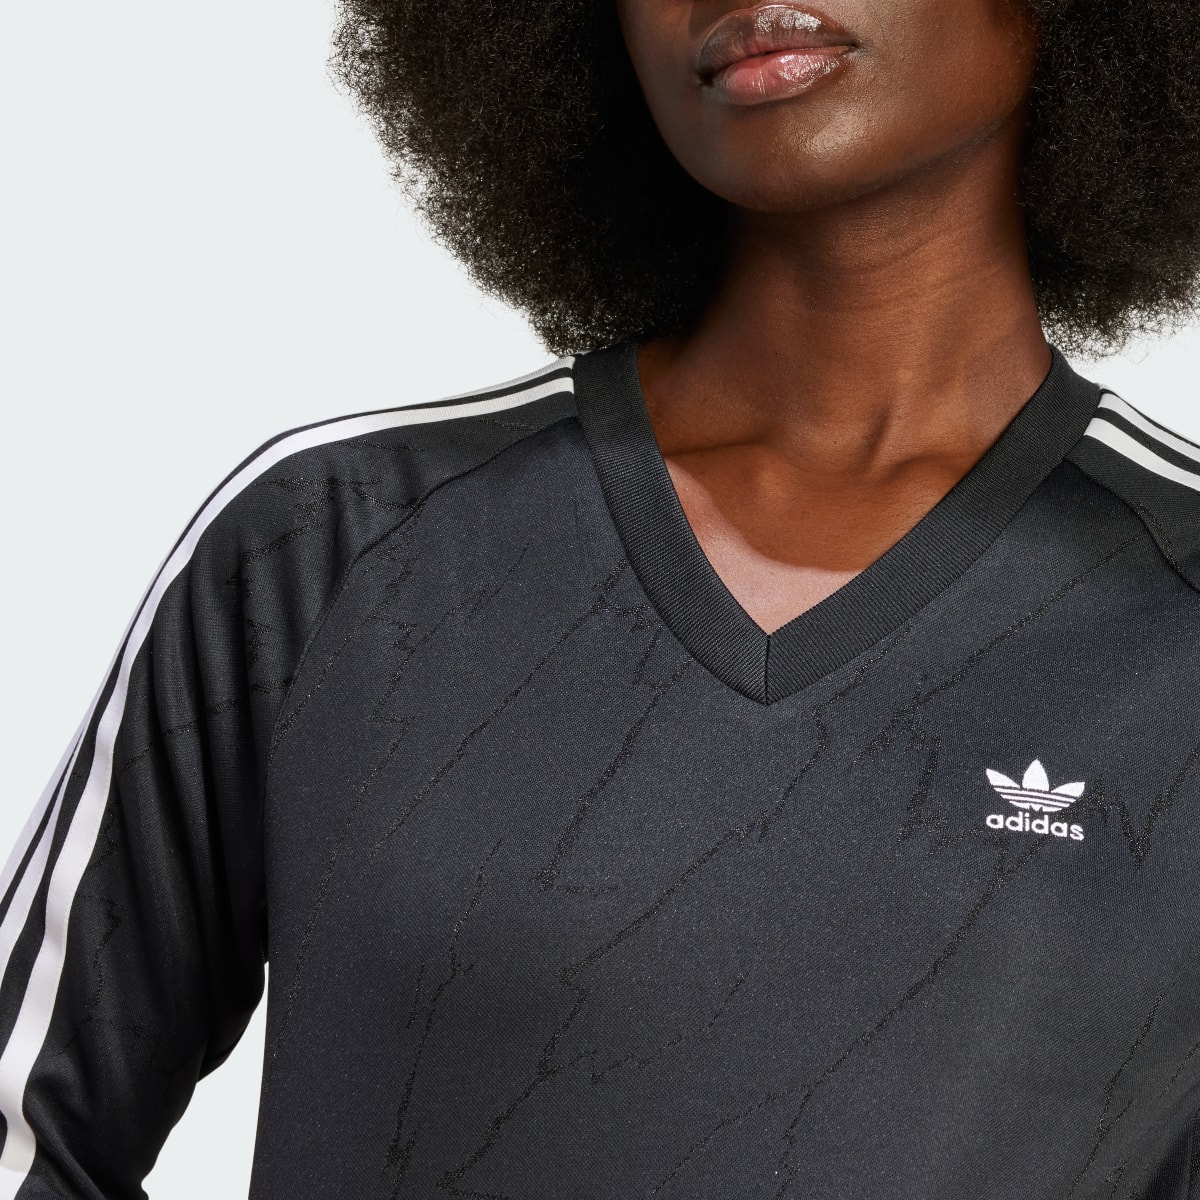 Adidas Long Sleeve Cropped Jersey. 6